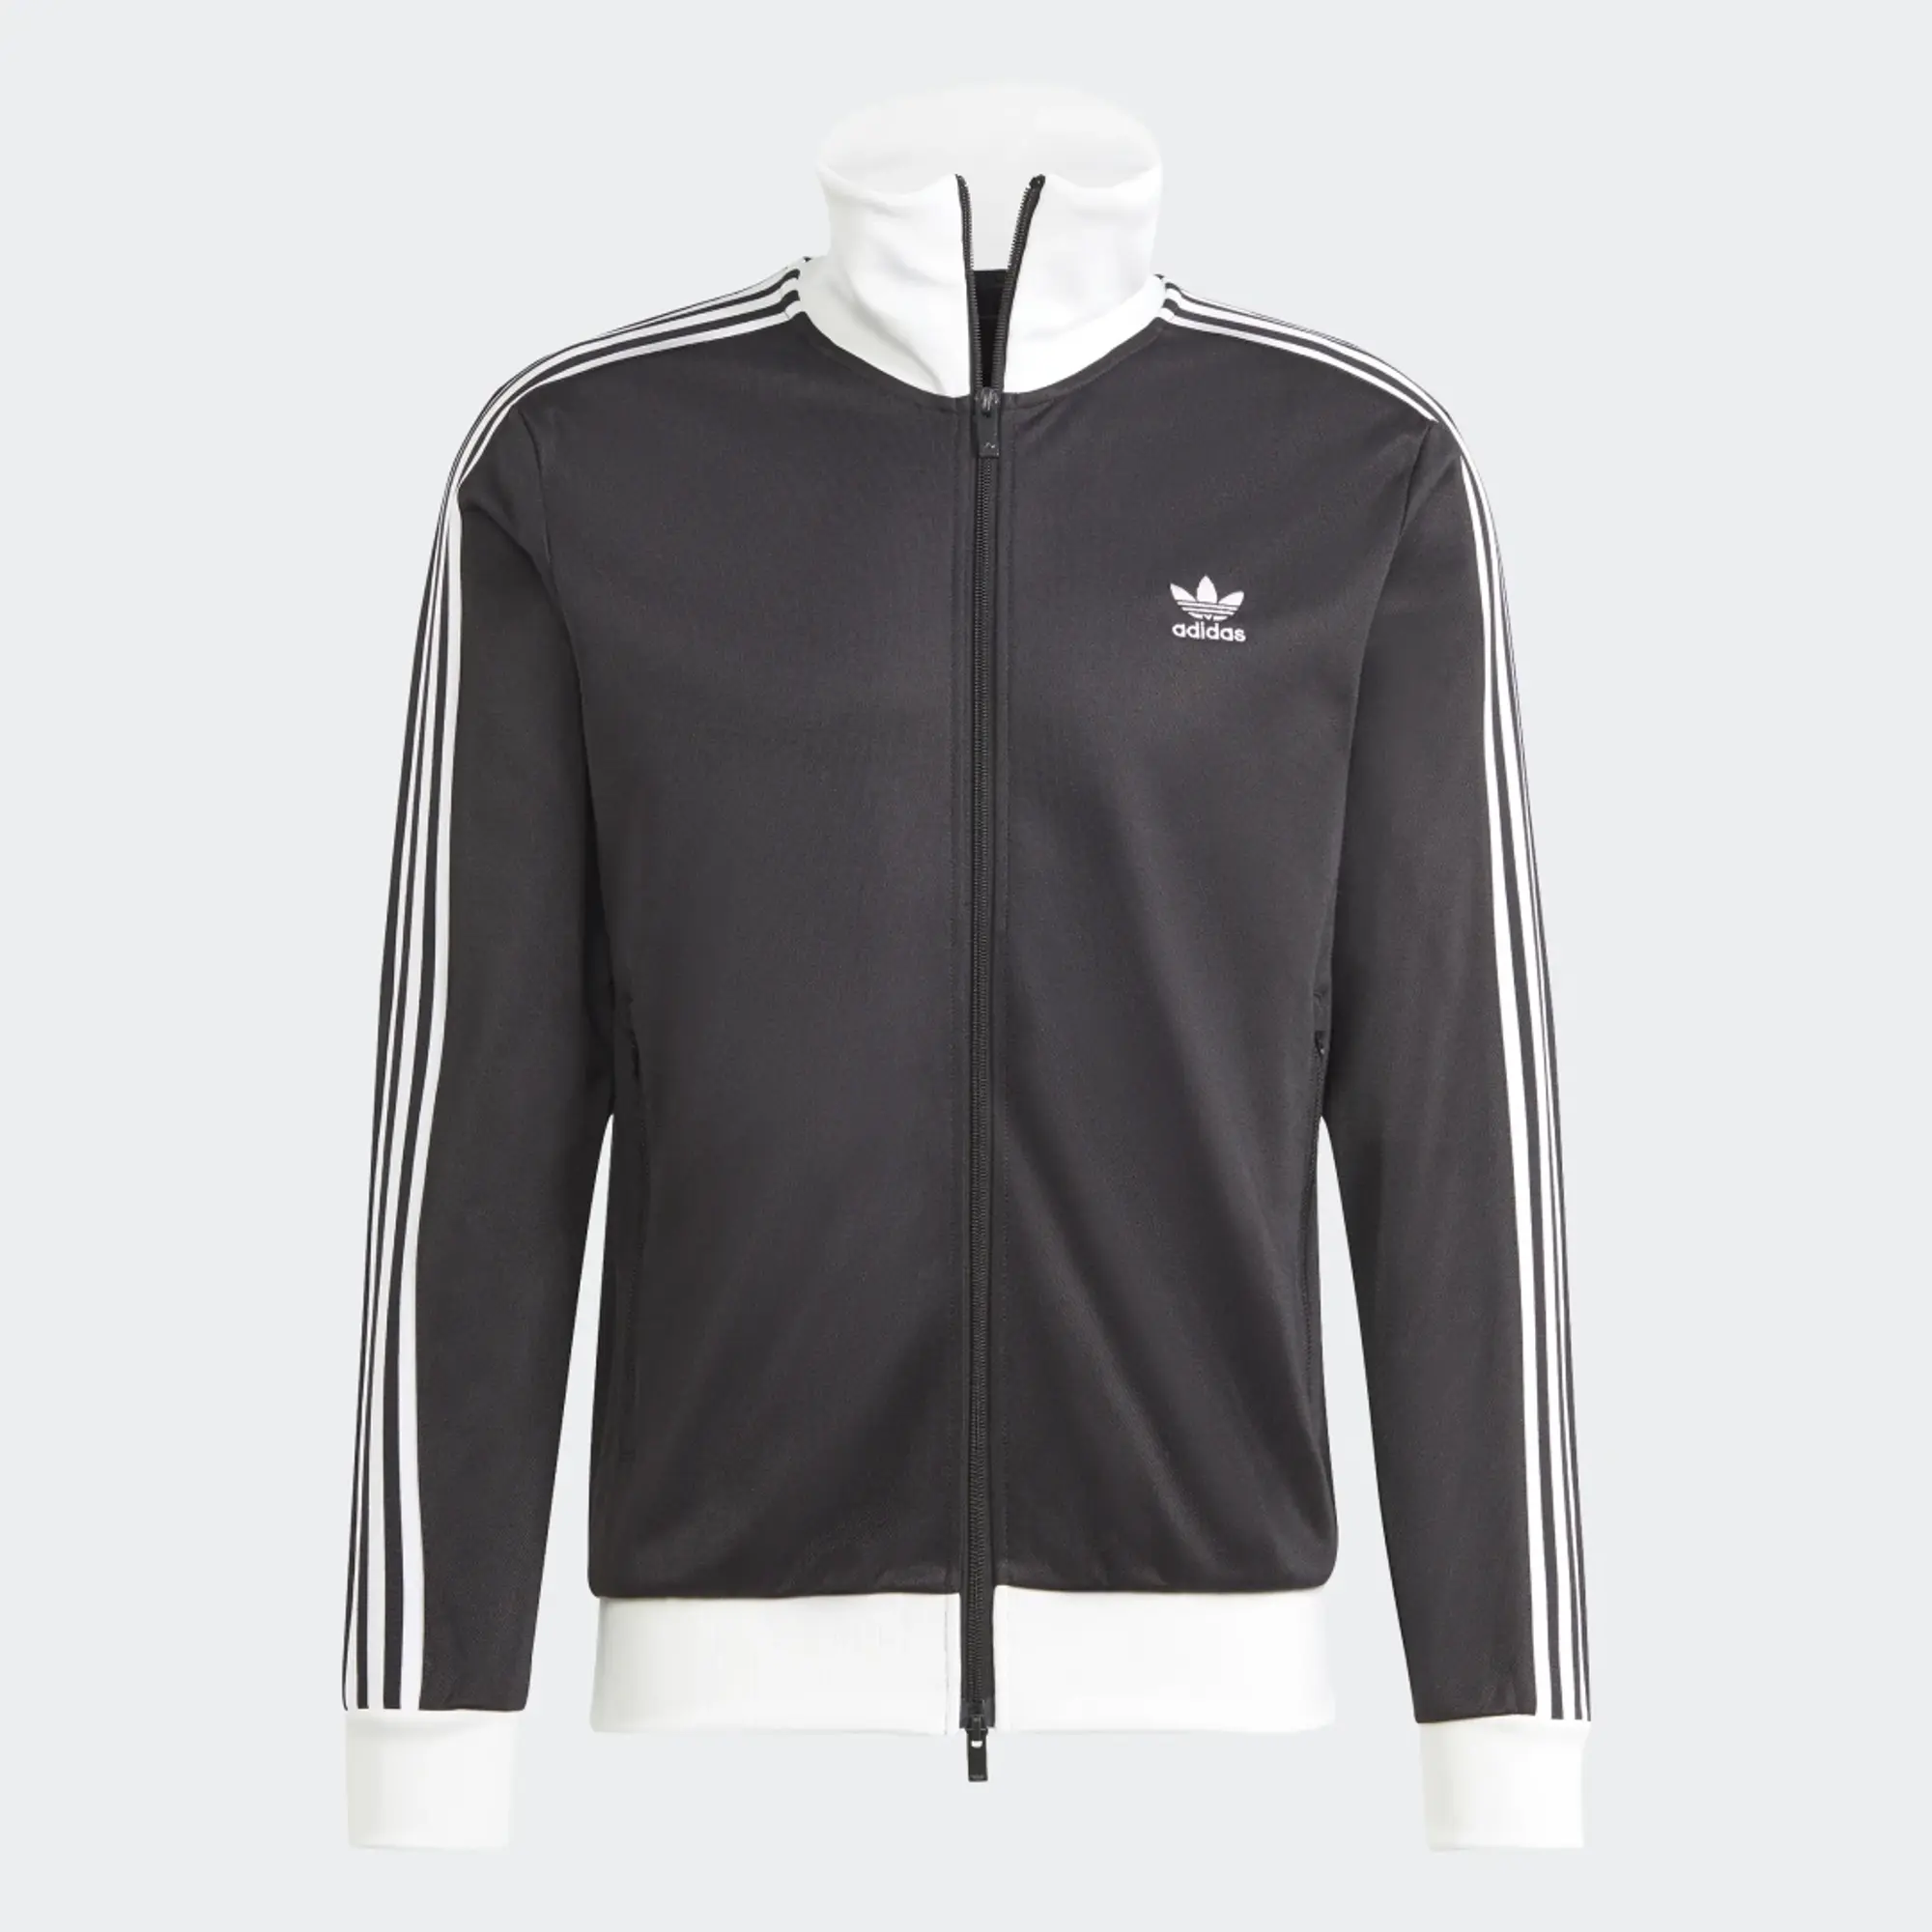 Adidas Men's Beckenbauer Track Top Black/White